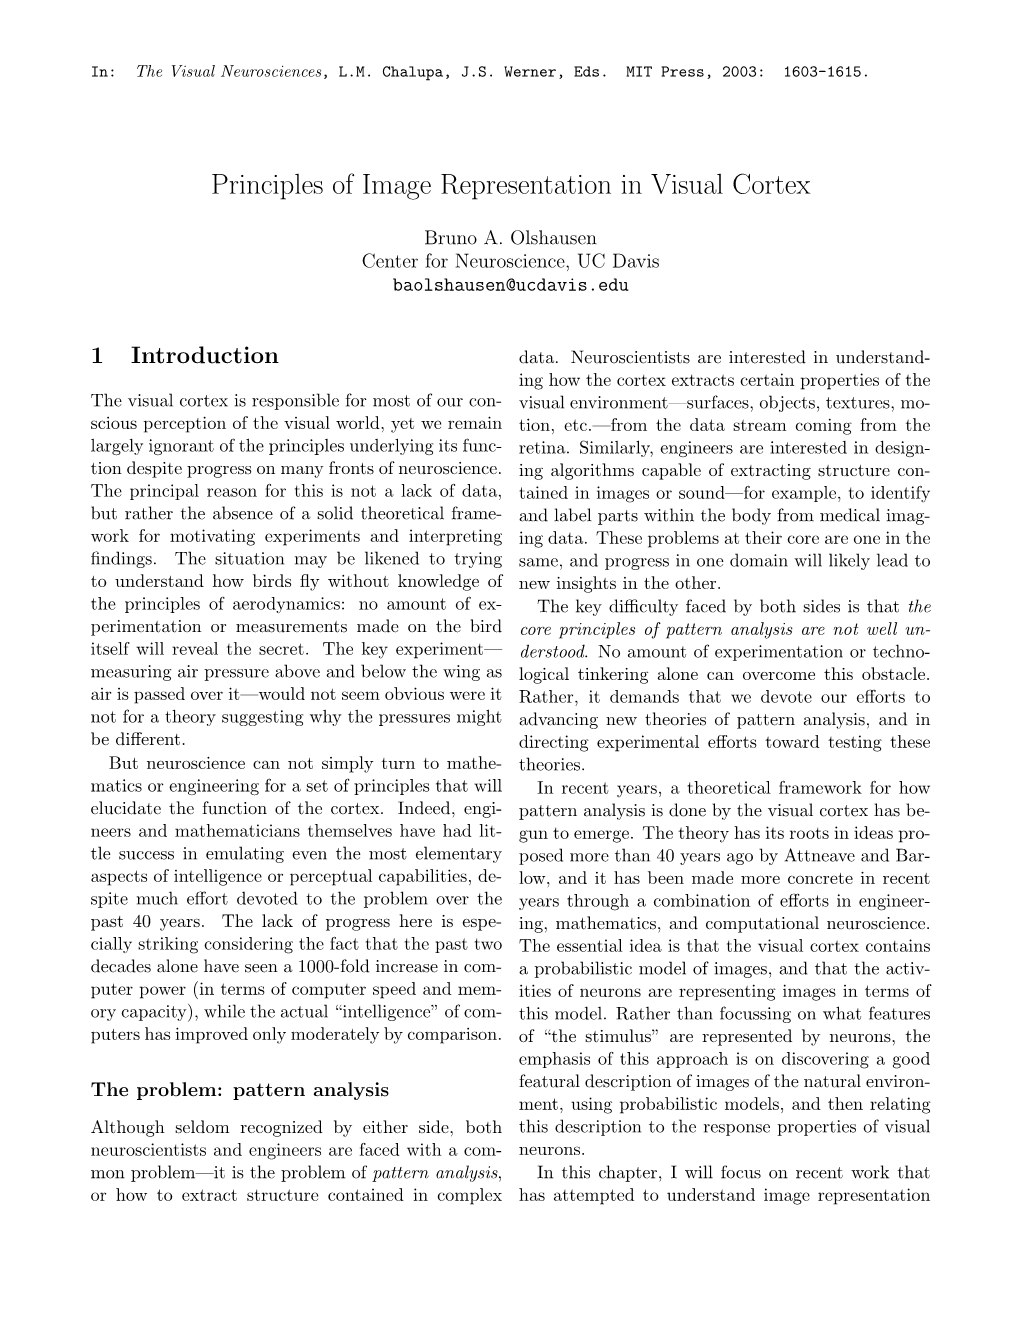 Principles of Image Representation in Visual Cortex